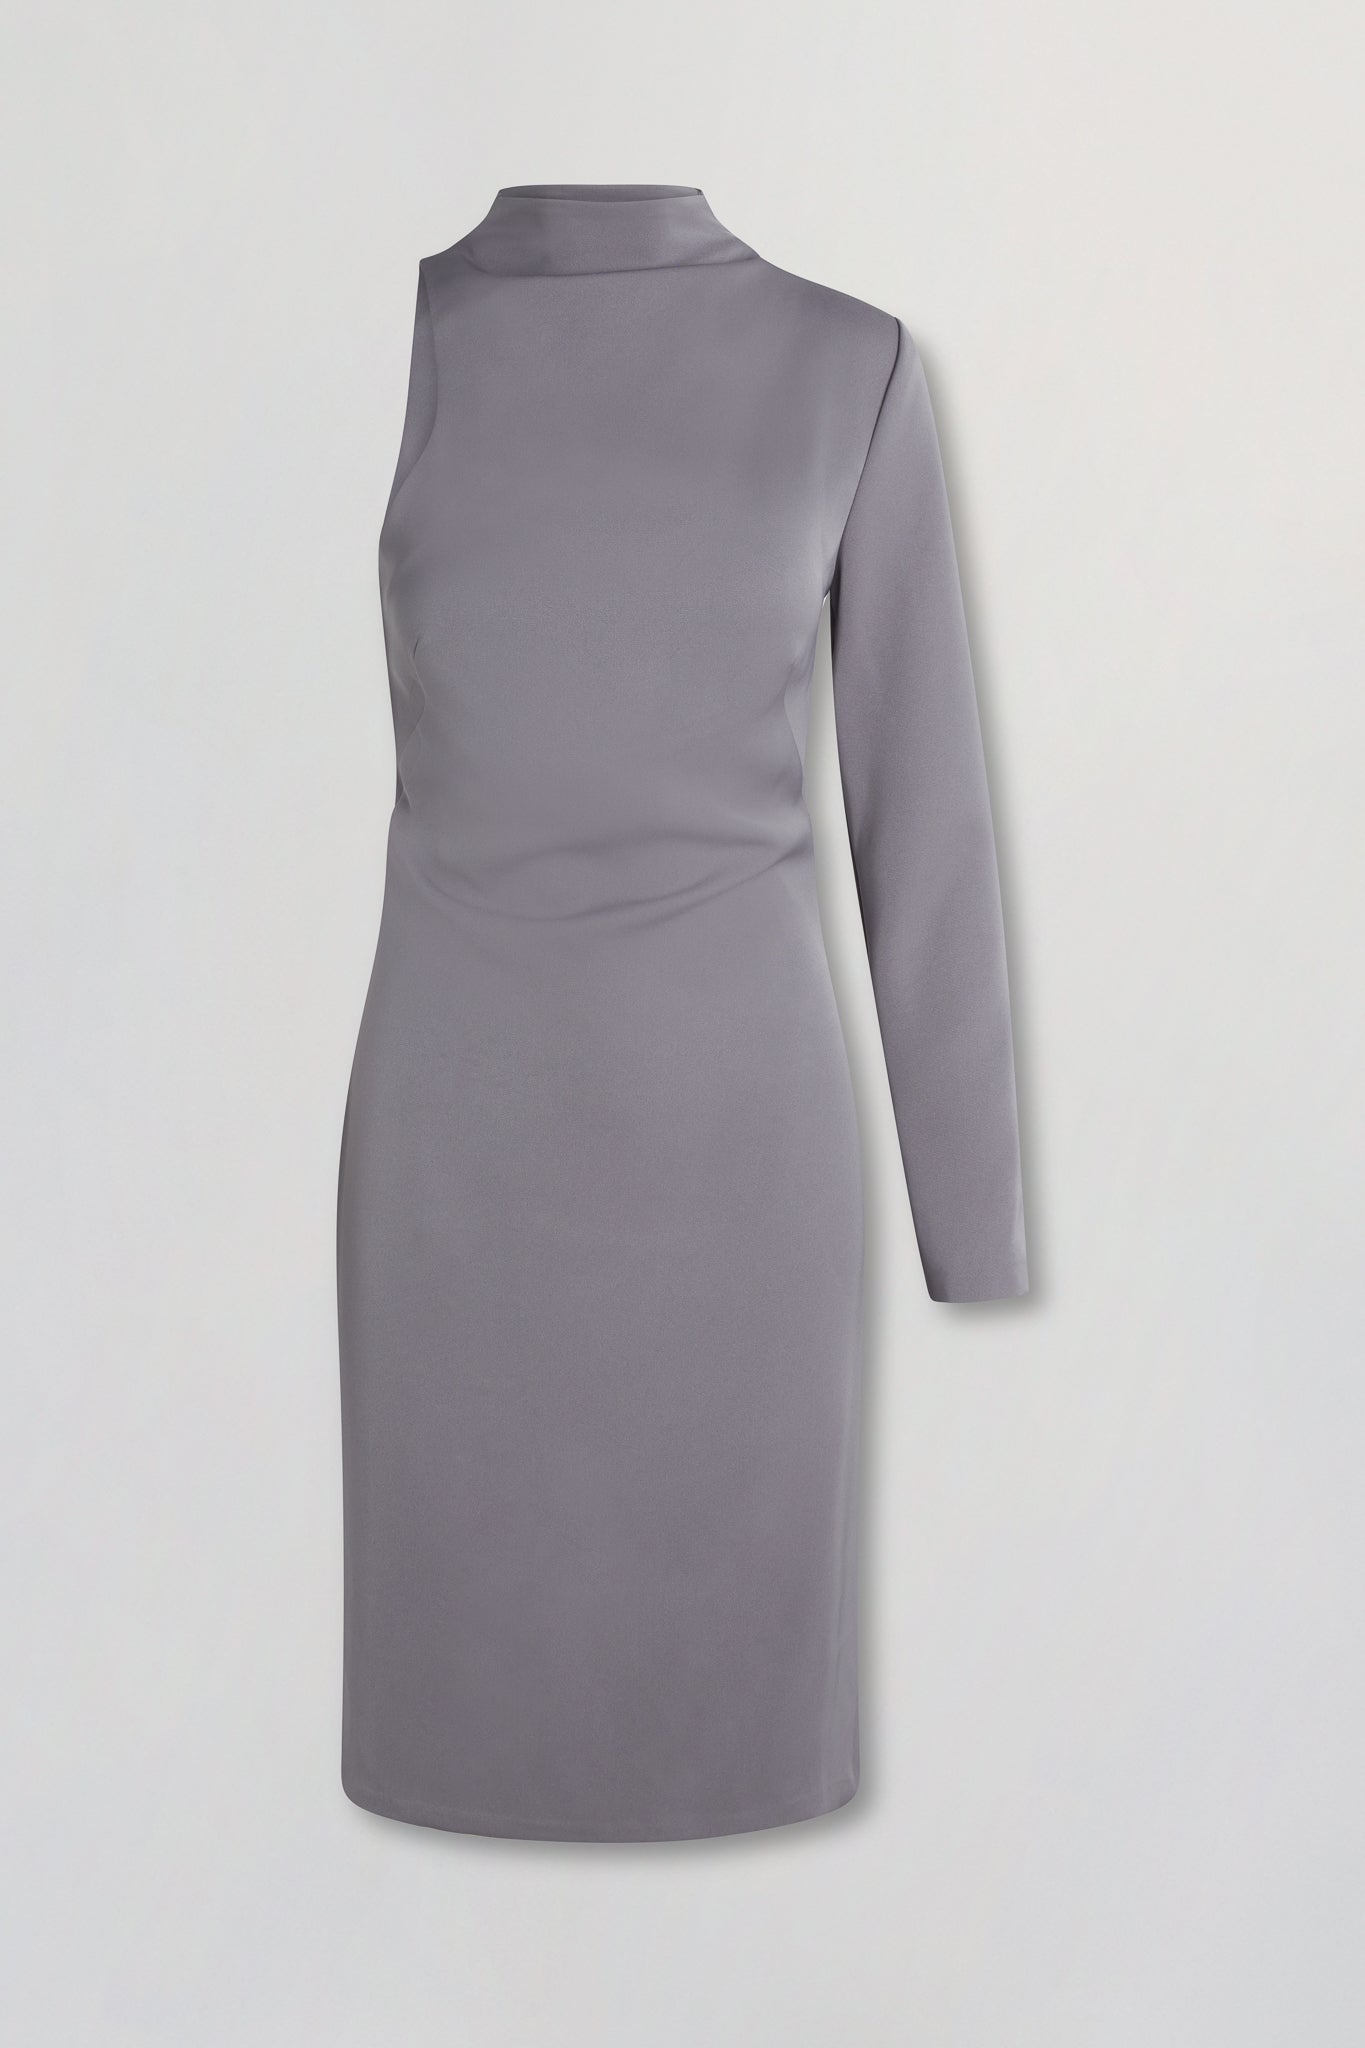 Single sleeve midi dress in gray